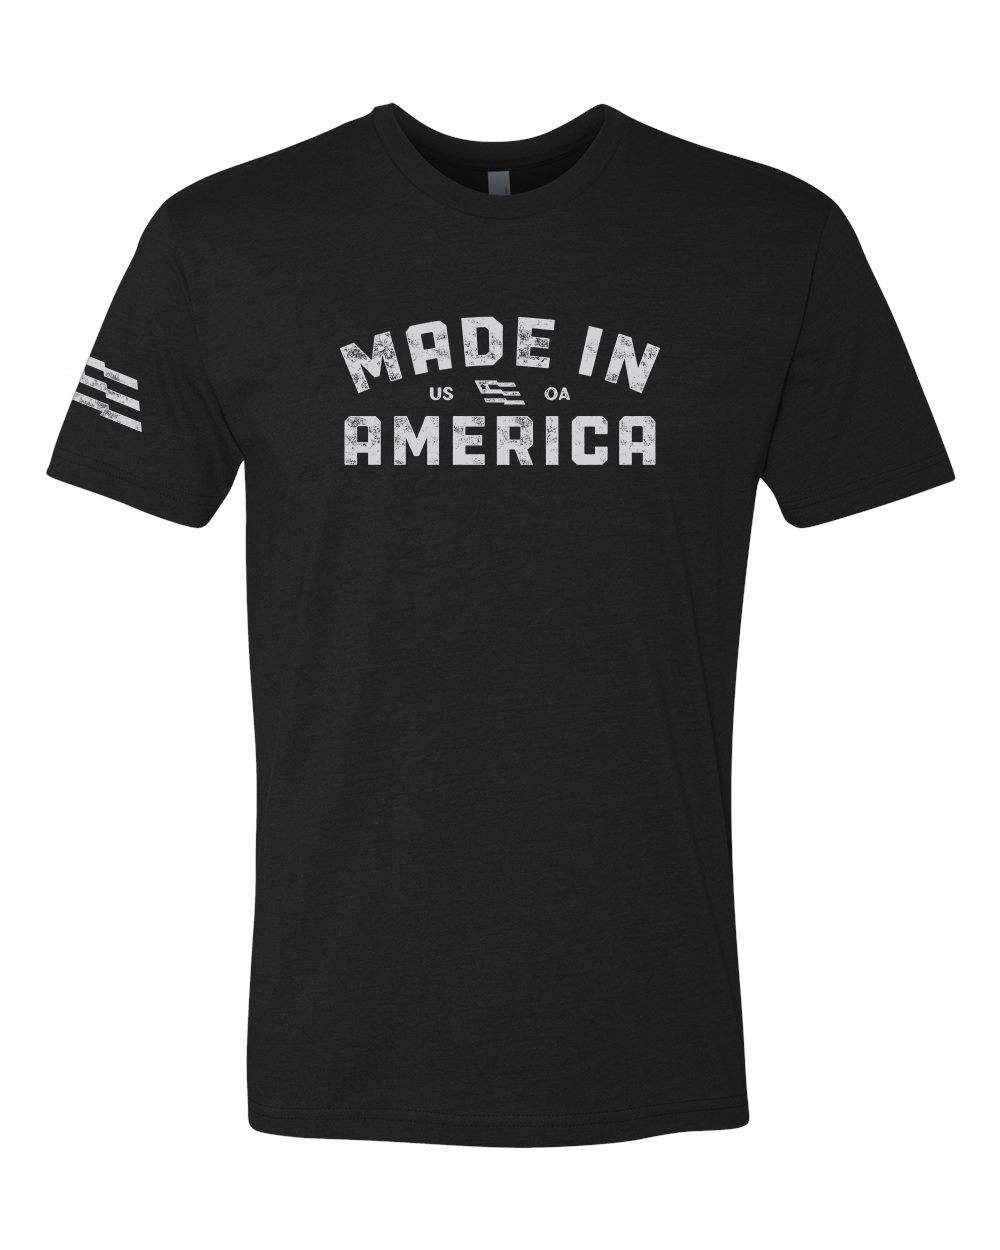 Made In America - Black